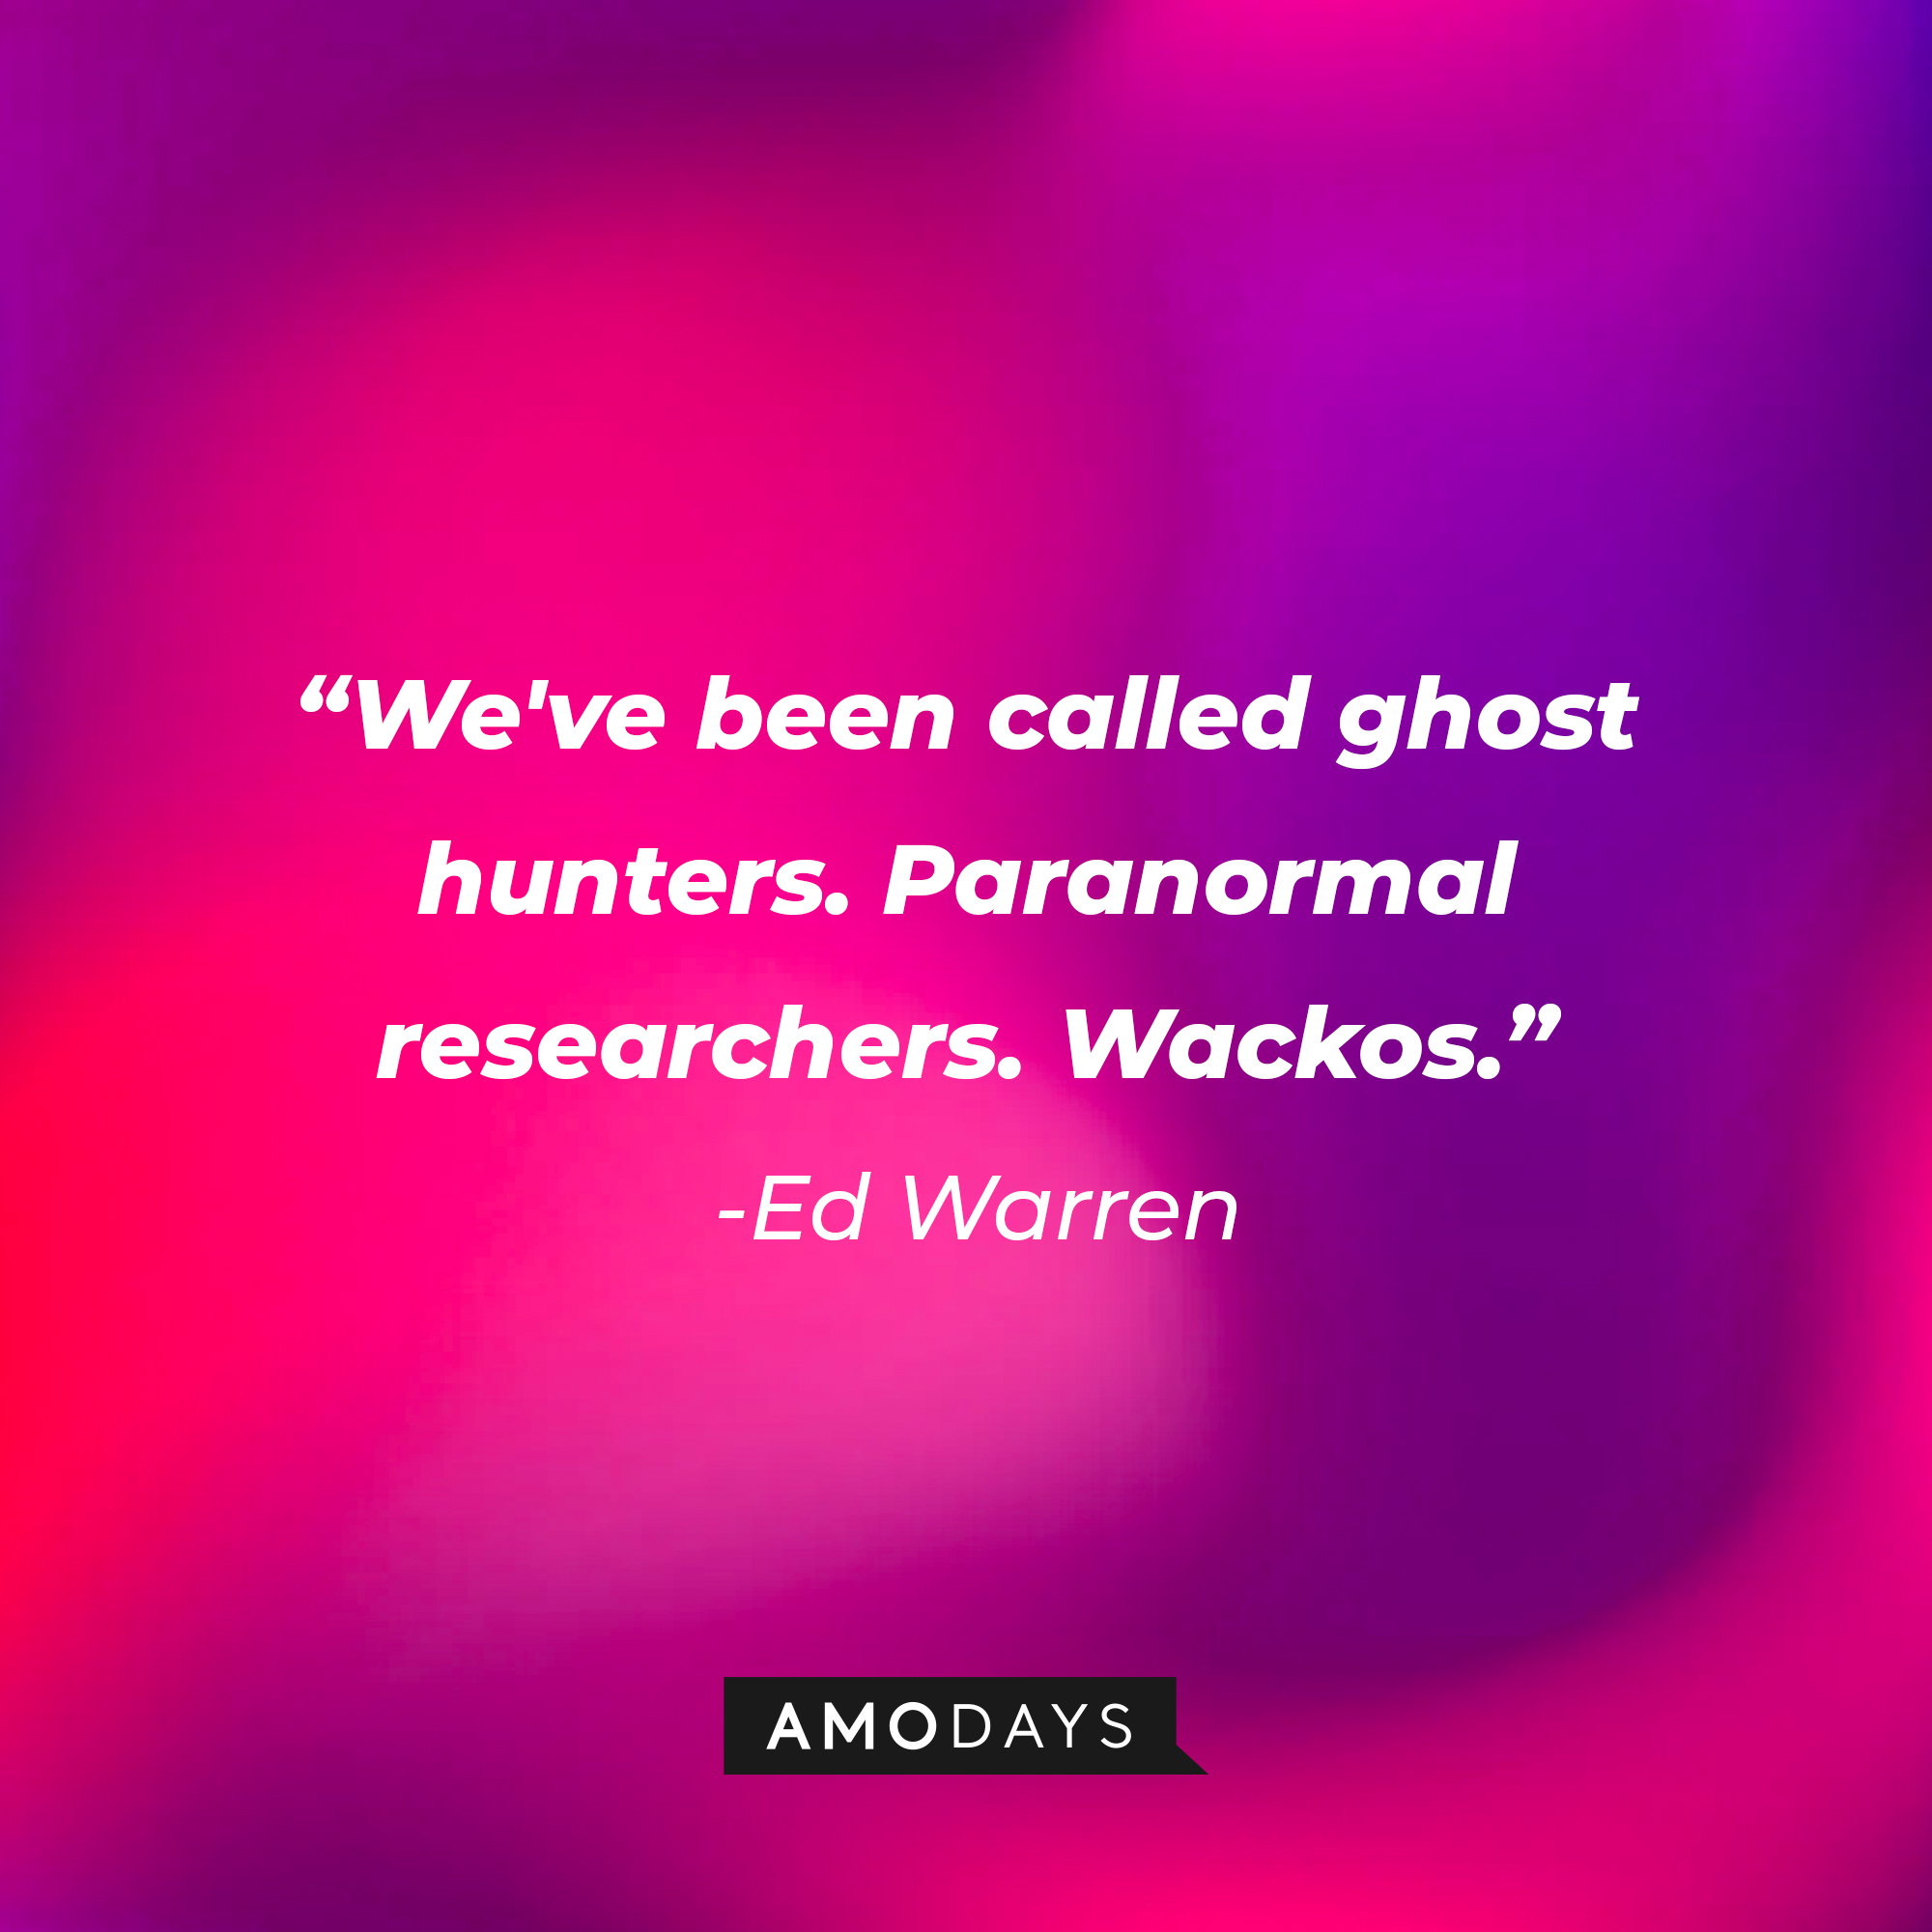 Ed Warren’s quote: “We've been called ghost hunters. Paranormal researchers. Wackos.” | Source: AmoDays